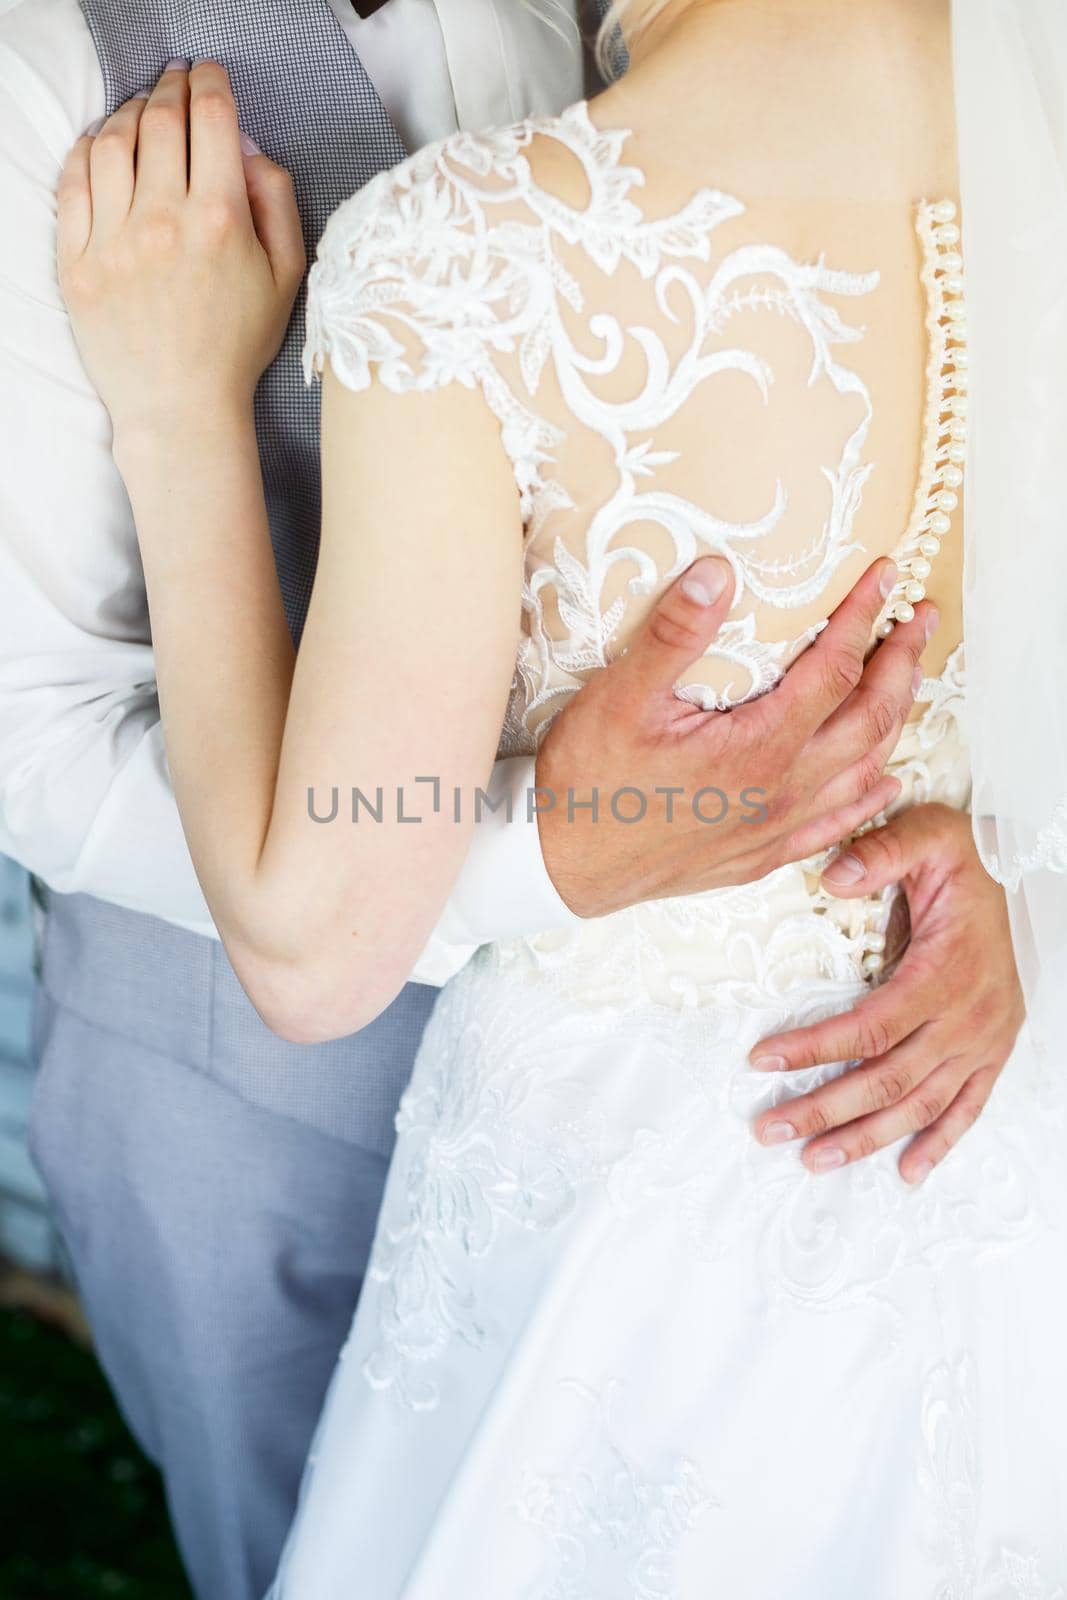 Bride and groom hugging on a wedding day by Dmitrytph